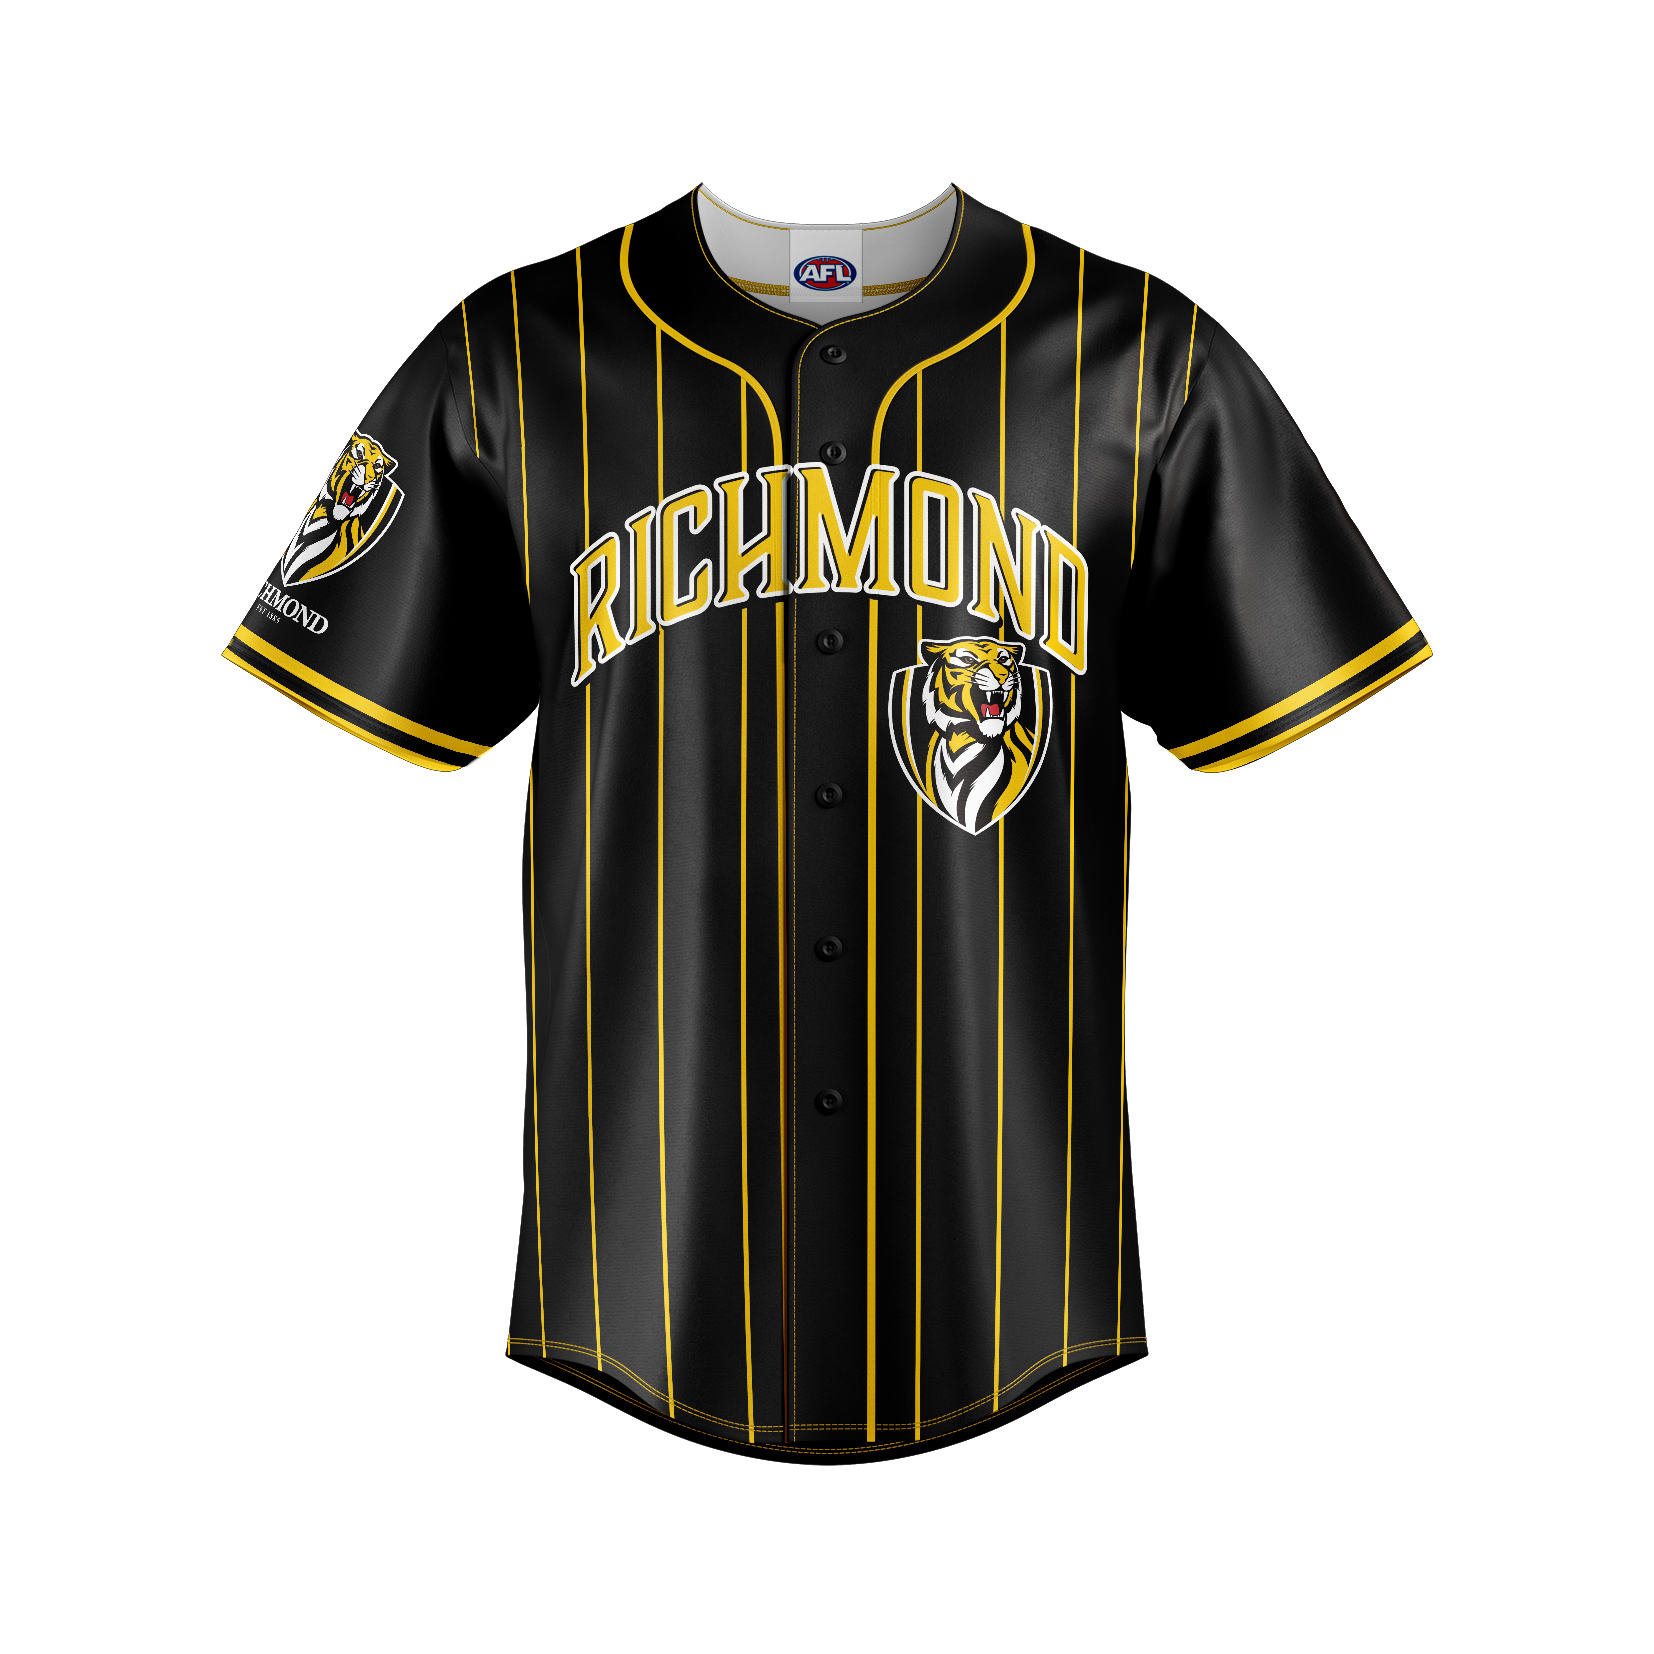 Richmond Tigers "Slugger" Baseball Shirt